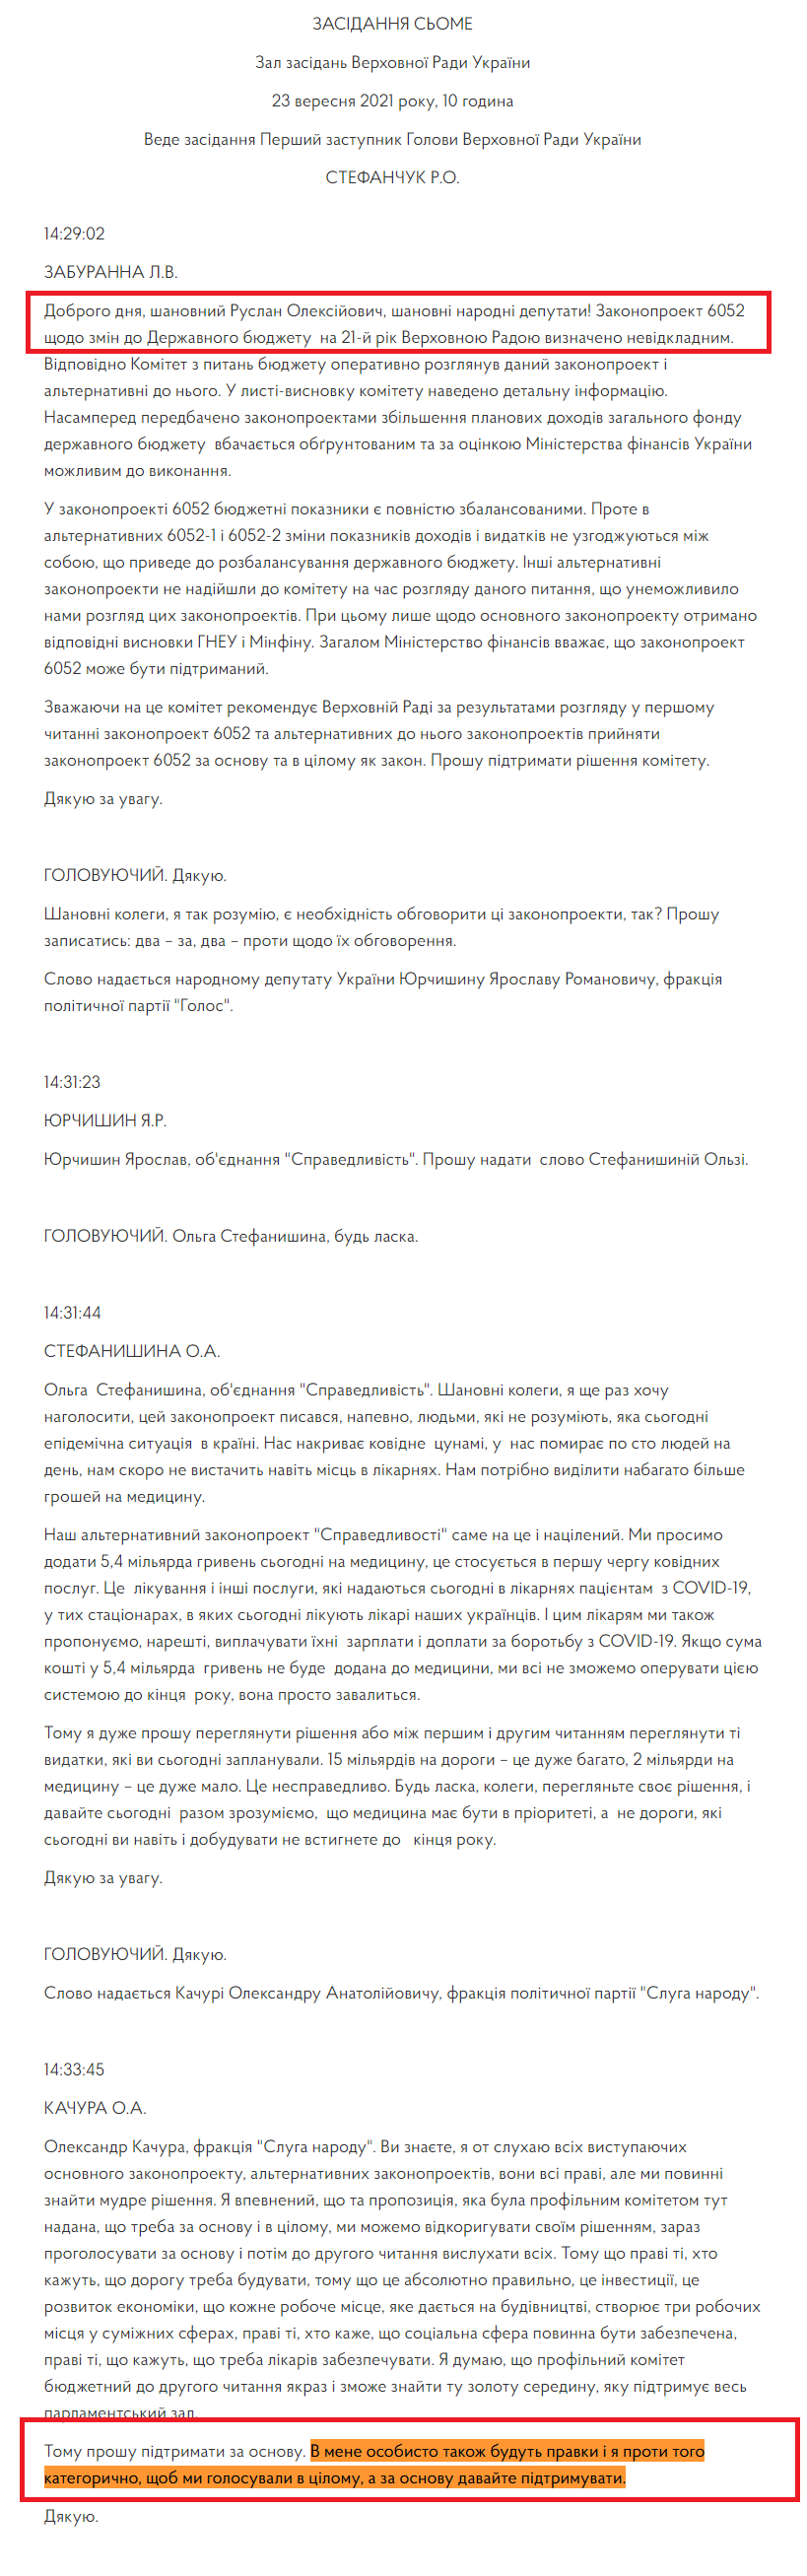 https://www.rada.gov.ua/meeting/stenogr/show/7828.html